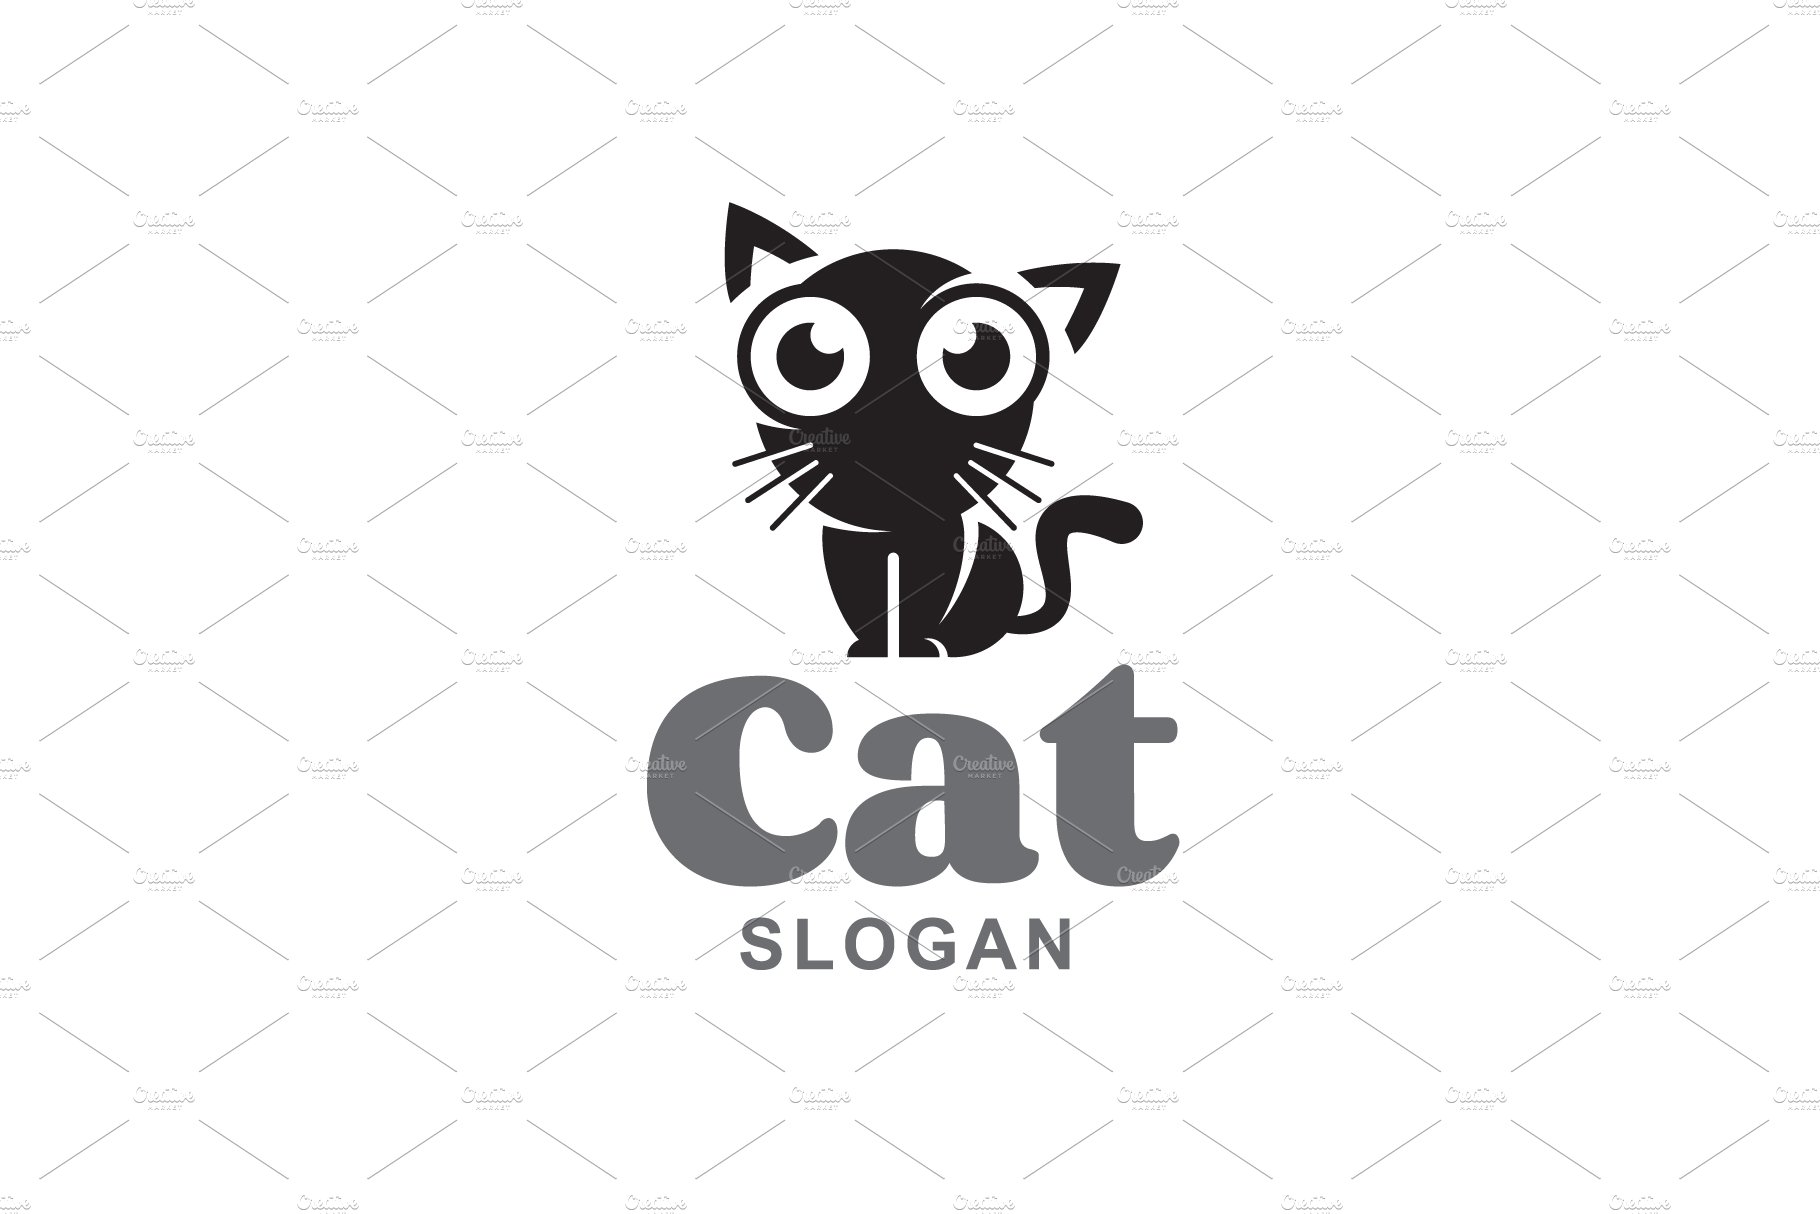 Black cute cat logo design template cover image.